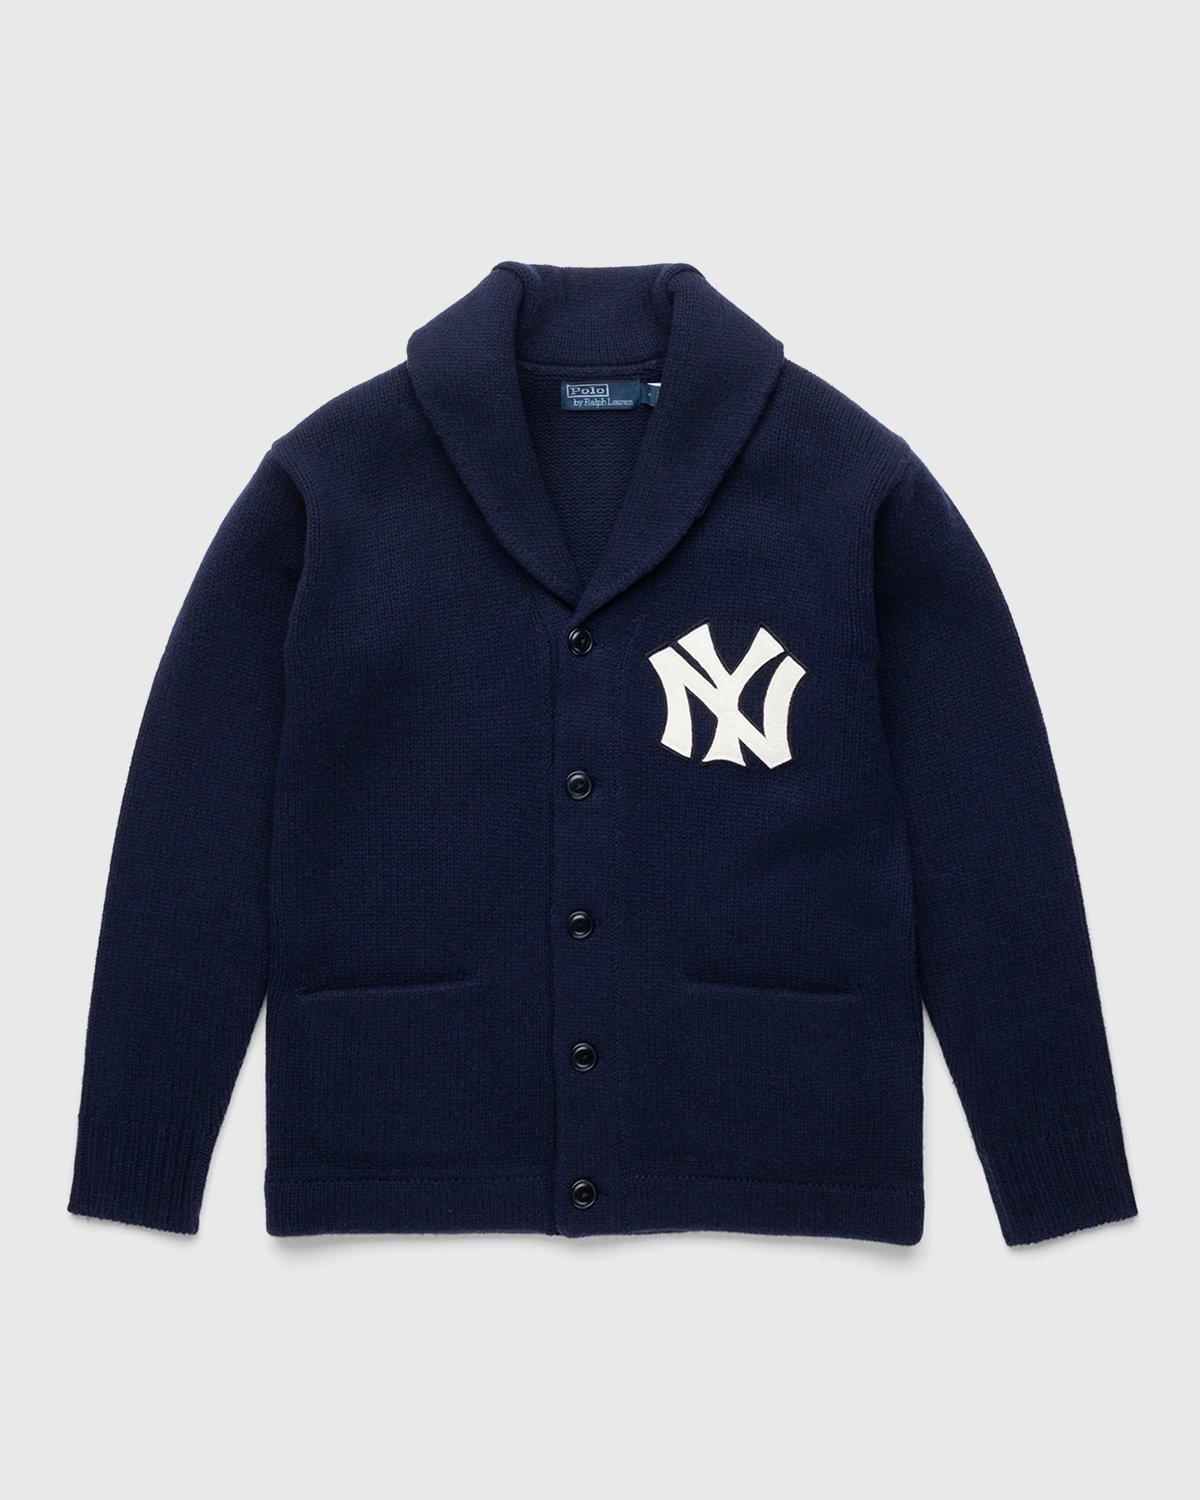 Ralph Lauren – Yankees Cardigan Navy - Cardigans - Blue - Image 1